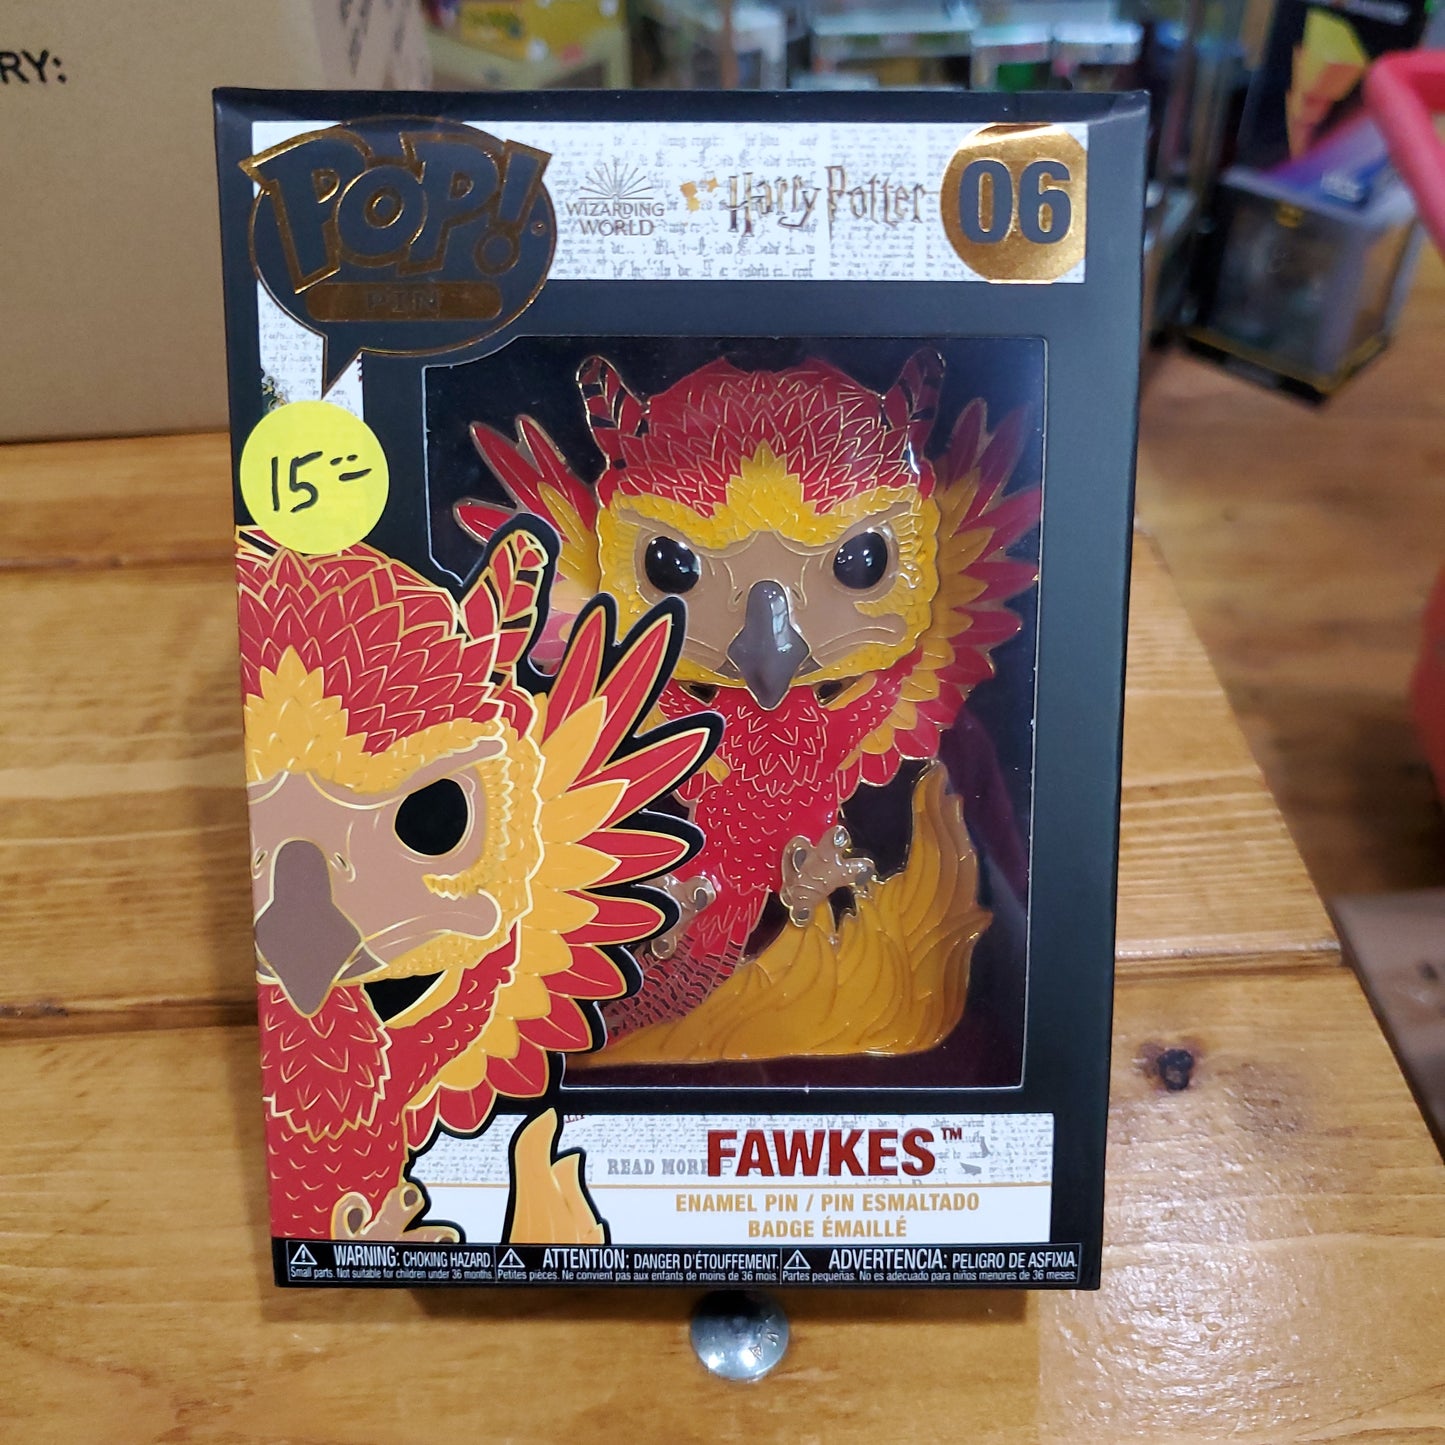 Harry Potter - Fawkes #06 - Funko Pop! Pin